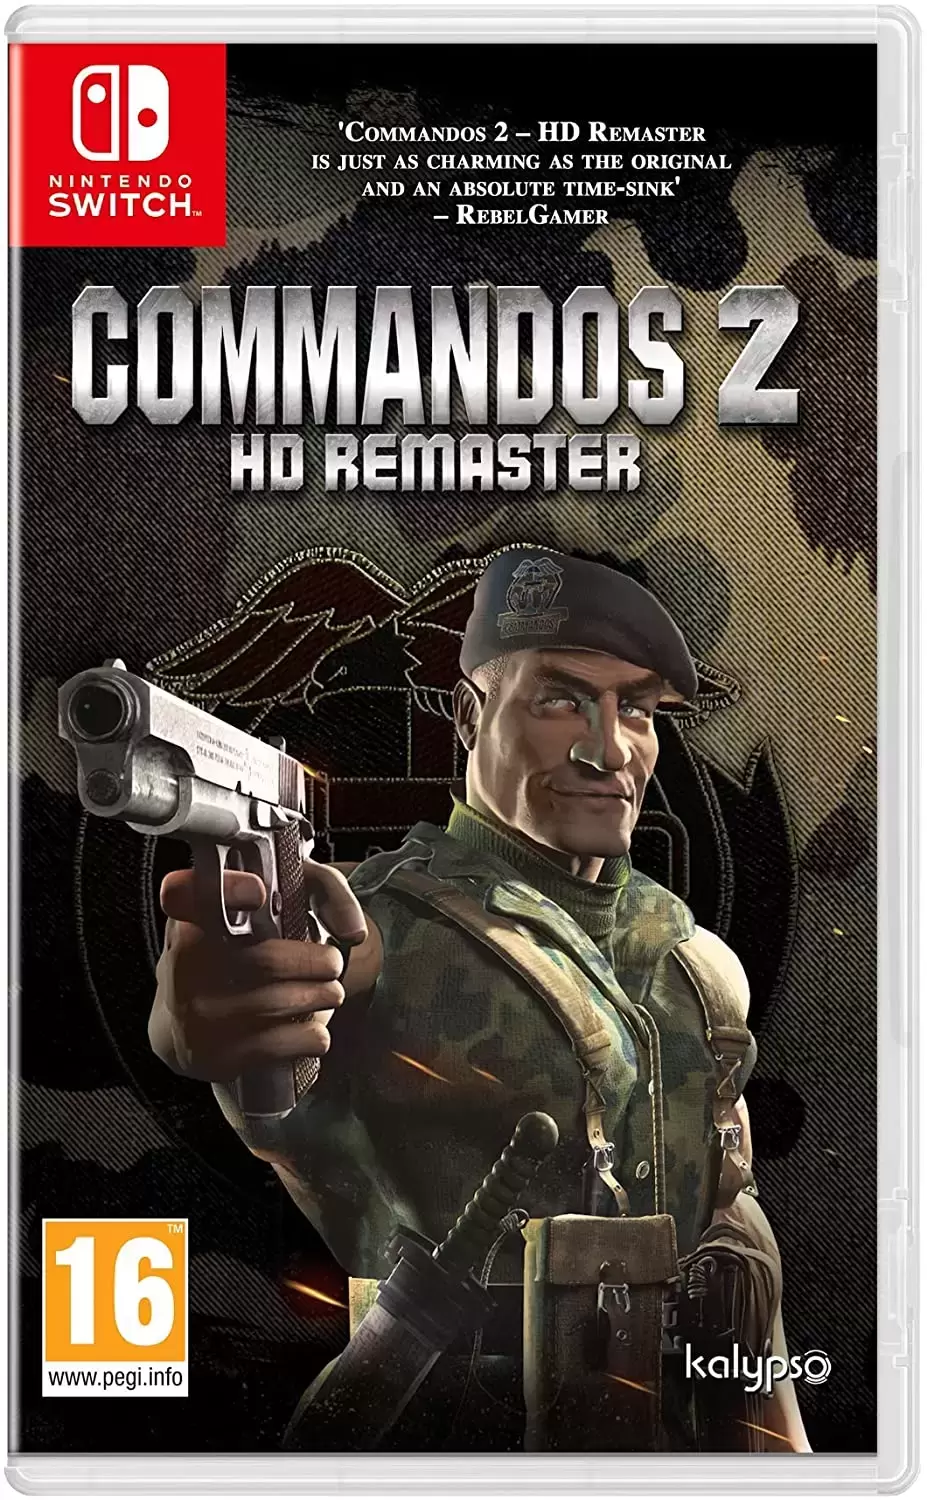 Nintendo Switch Games - Commando 2 HD REMASTER